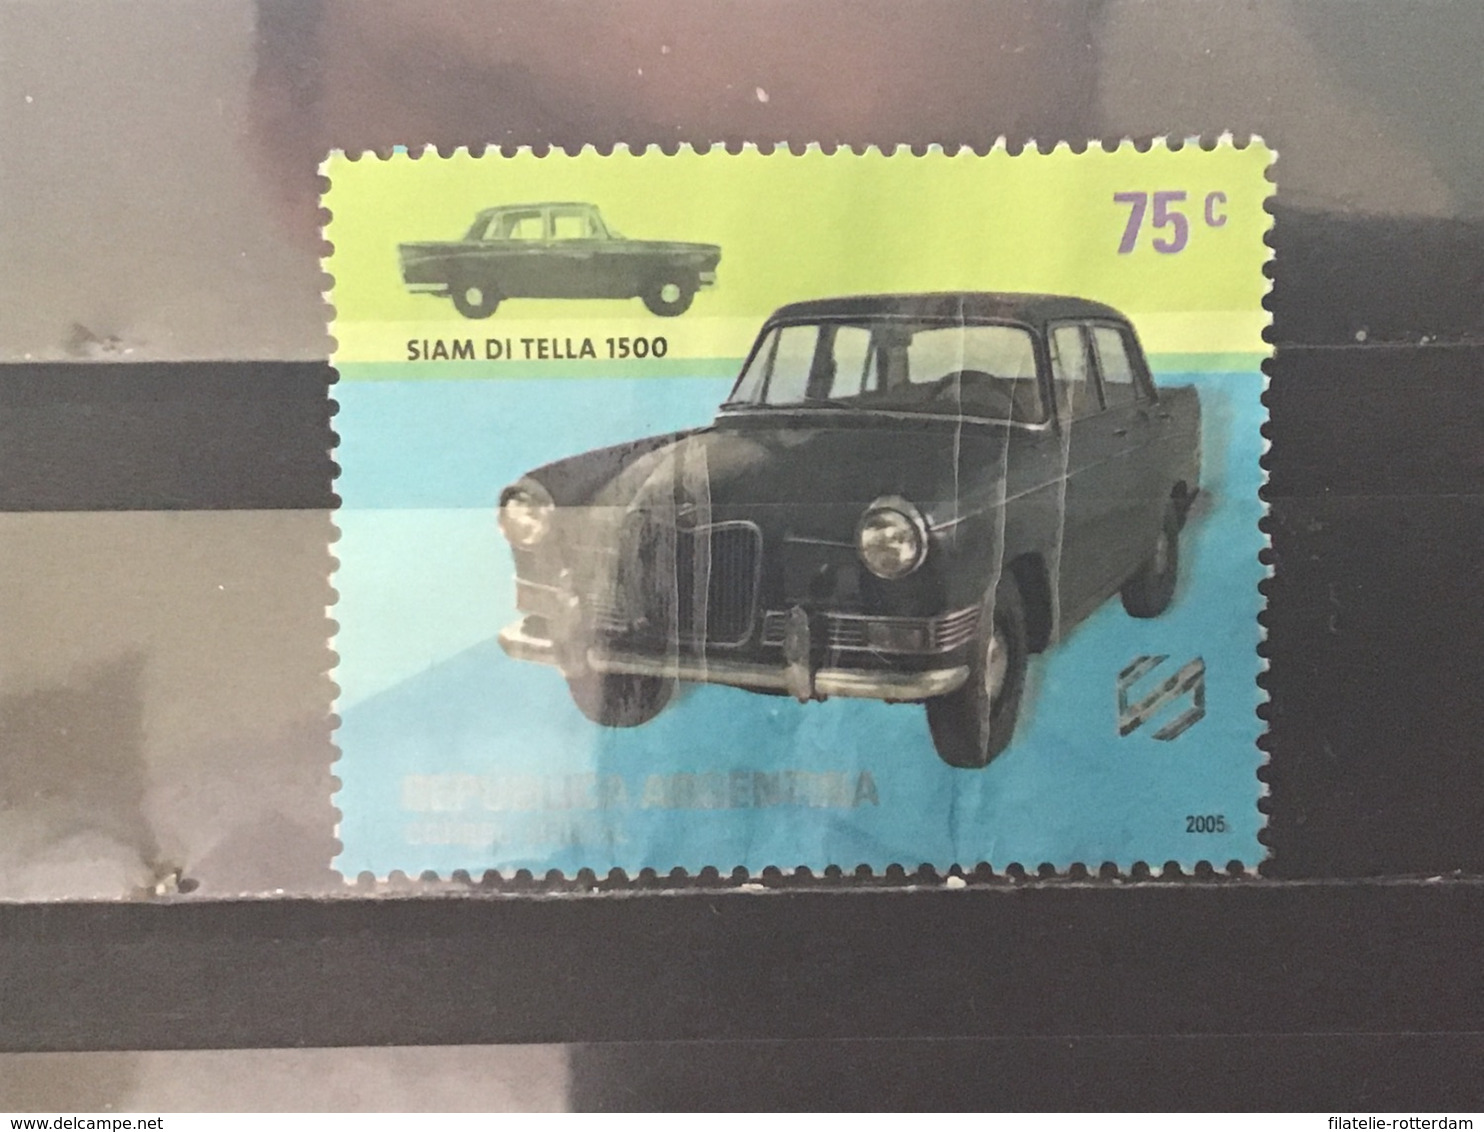 Argentinië / Argentina - Argentijnse Auto’s (75) 2005 - Used Stamps